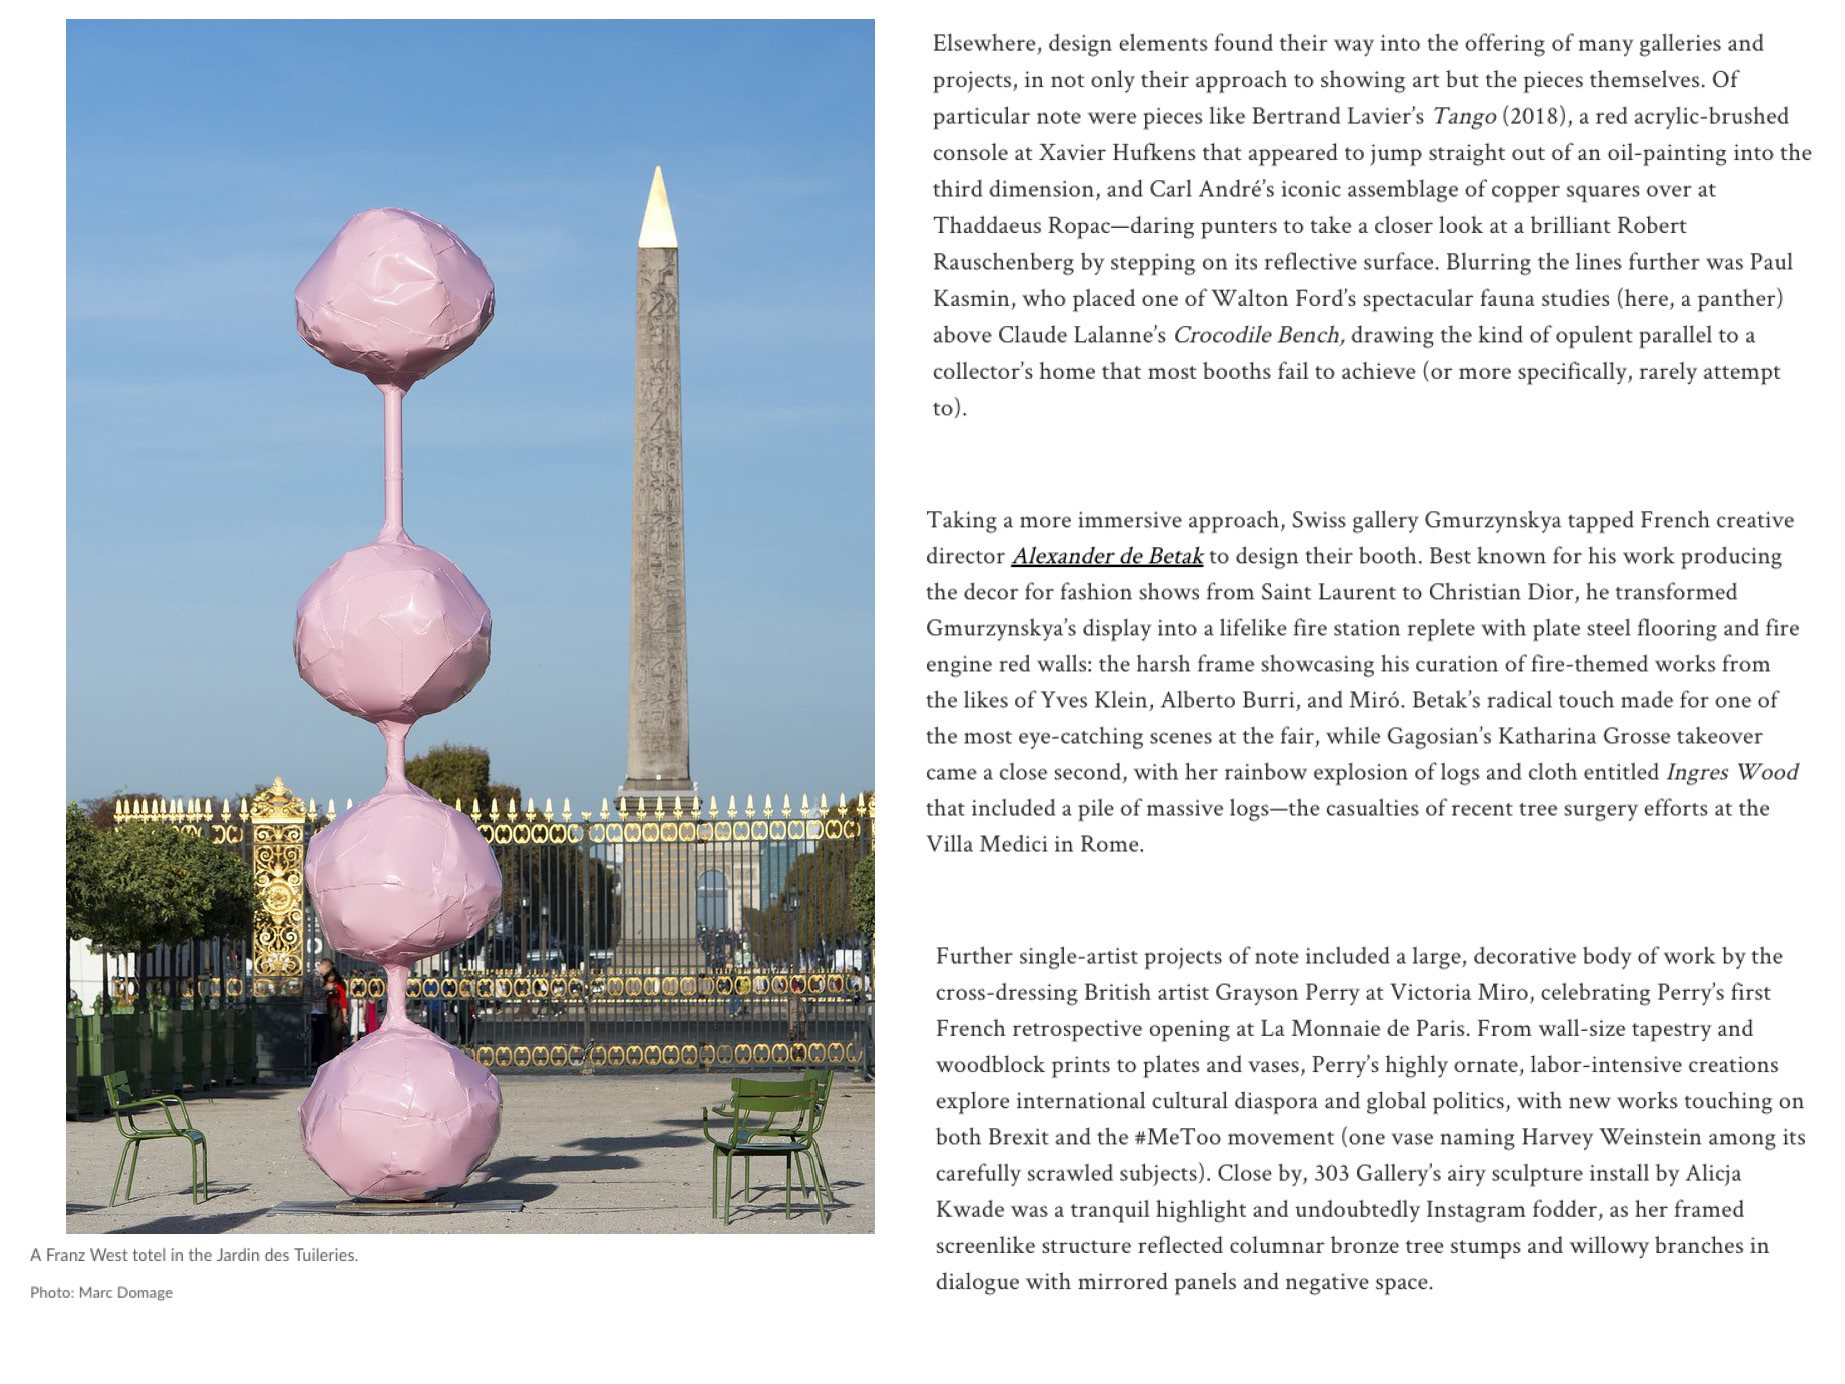 Dan Thawley | Architectural Digest | AD: Design aplenty at Paris's FIAC art fair | 10